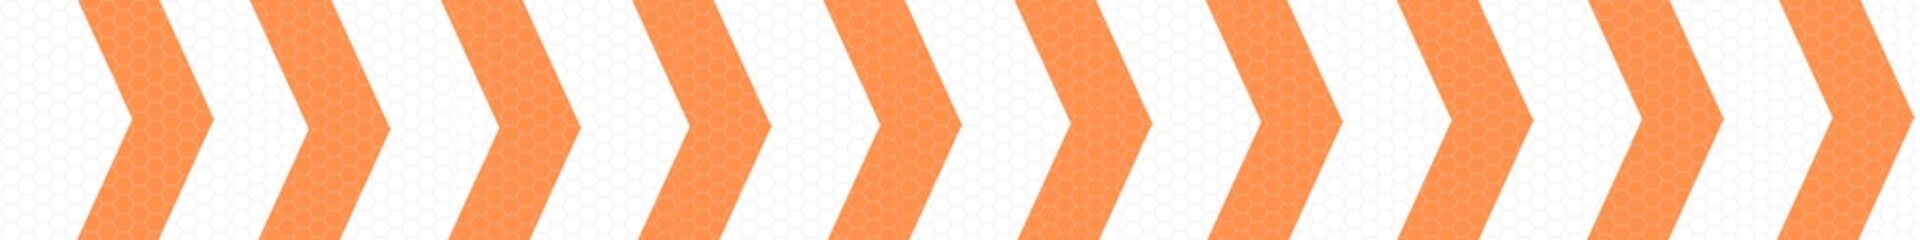 orange and white arrow honeycomb horizontal reflective tape. a long horizontal stripe in arrow desig